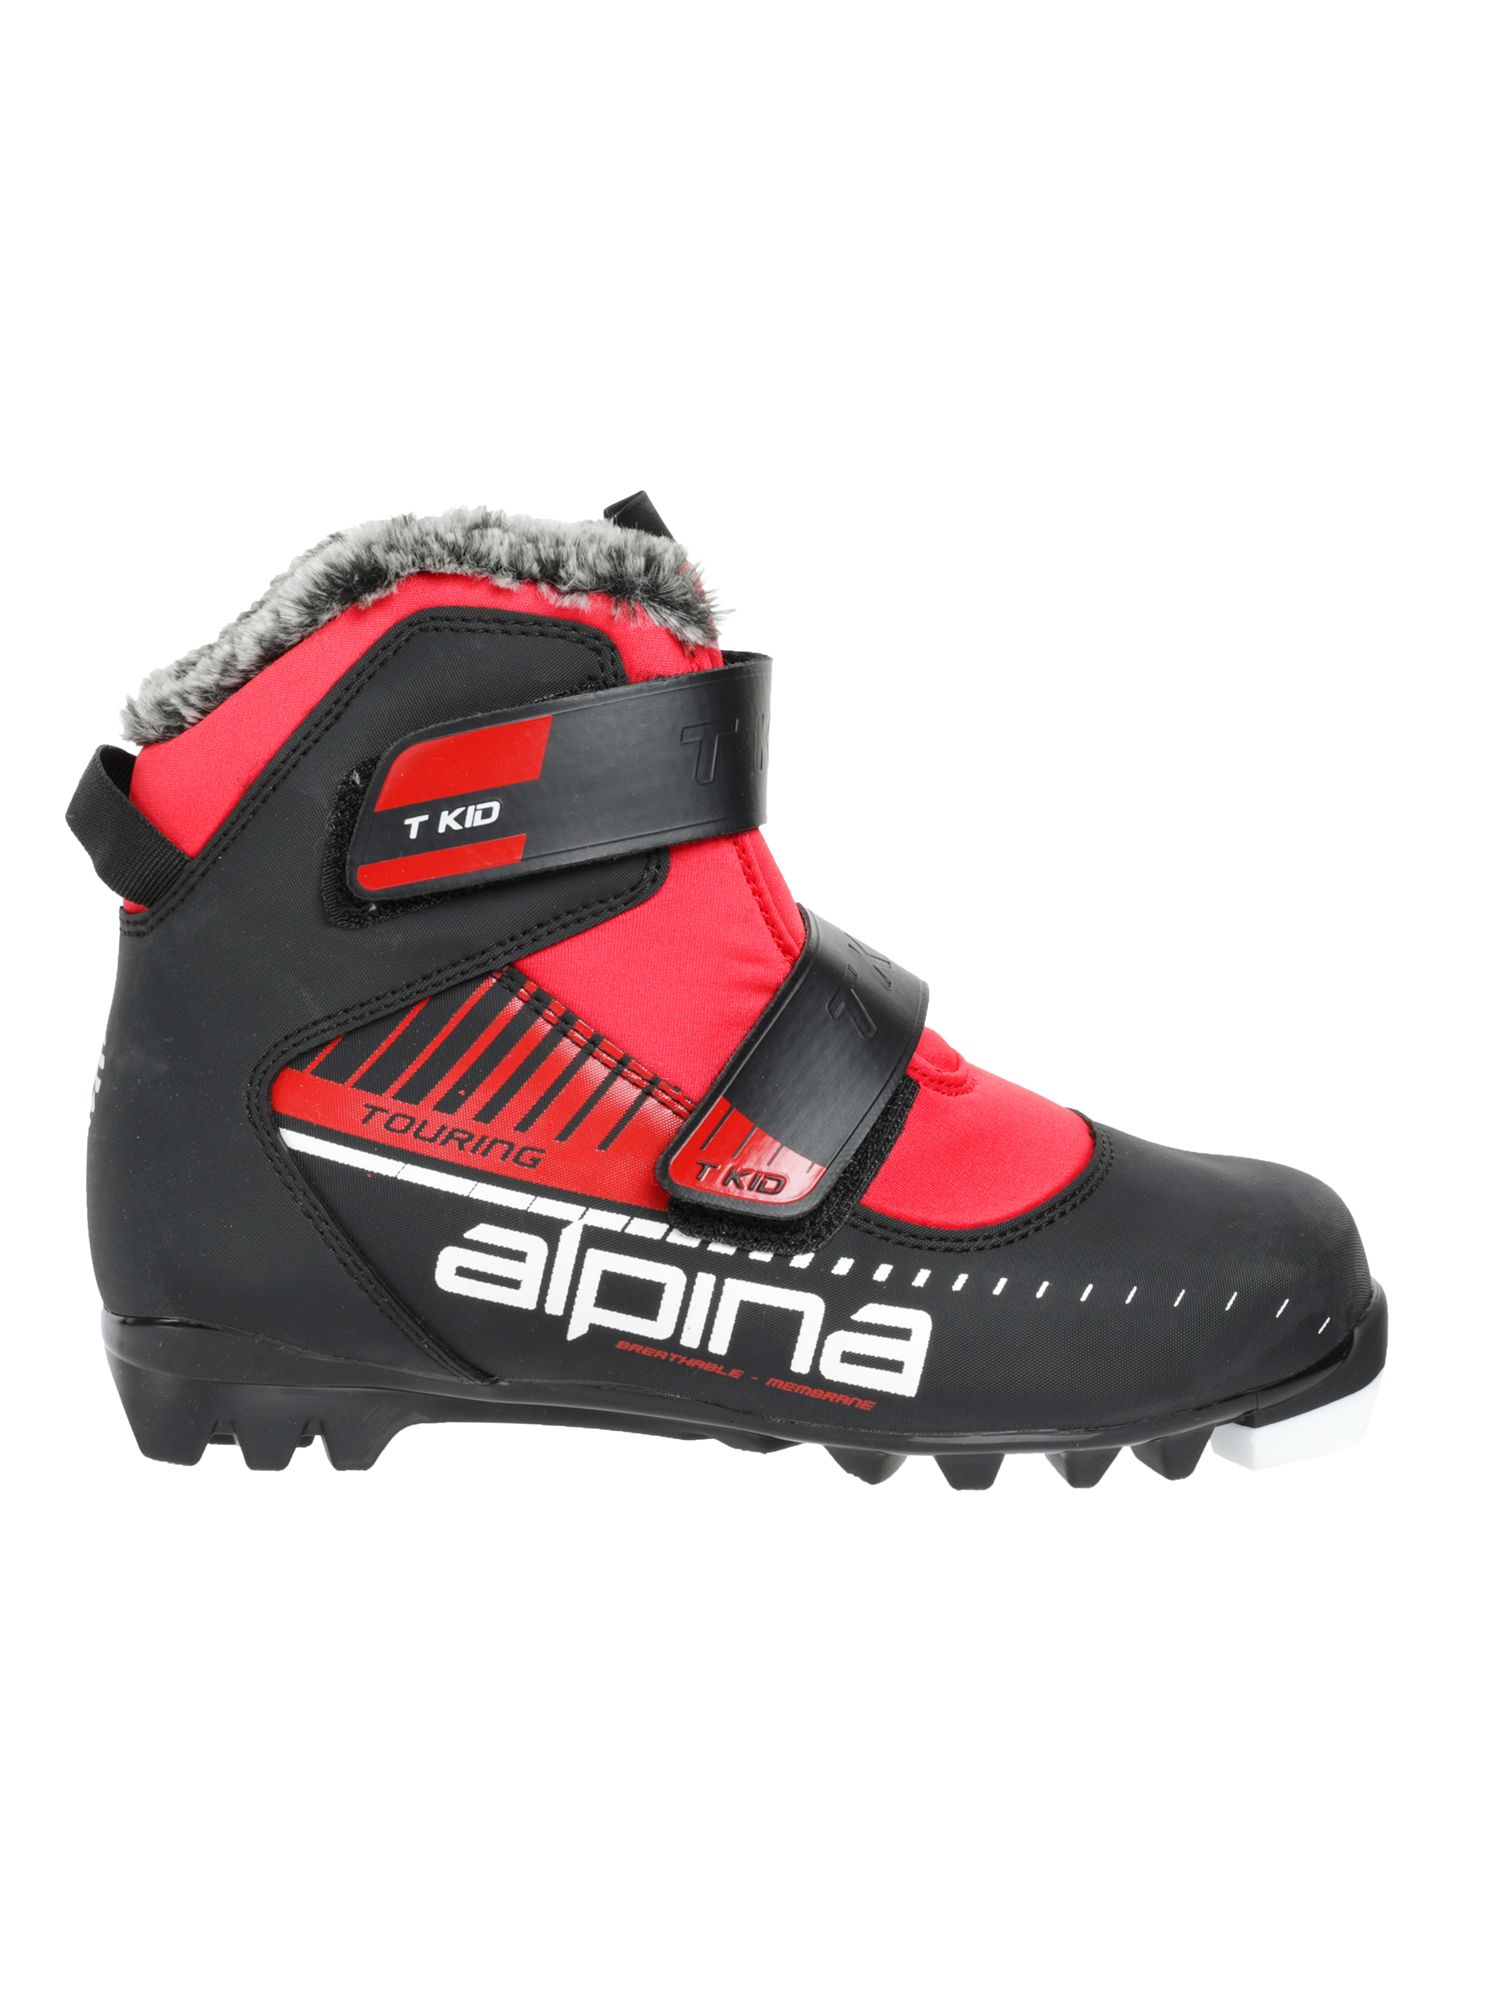 Альпина дети. Ботинки Alpina. Лыжные ботинки Alpina детские солнышко. Лыжные Alpina детские.